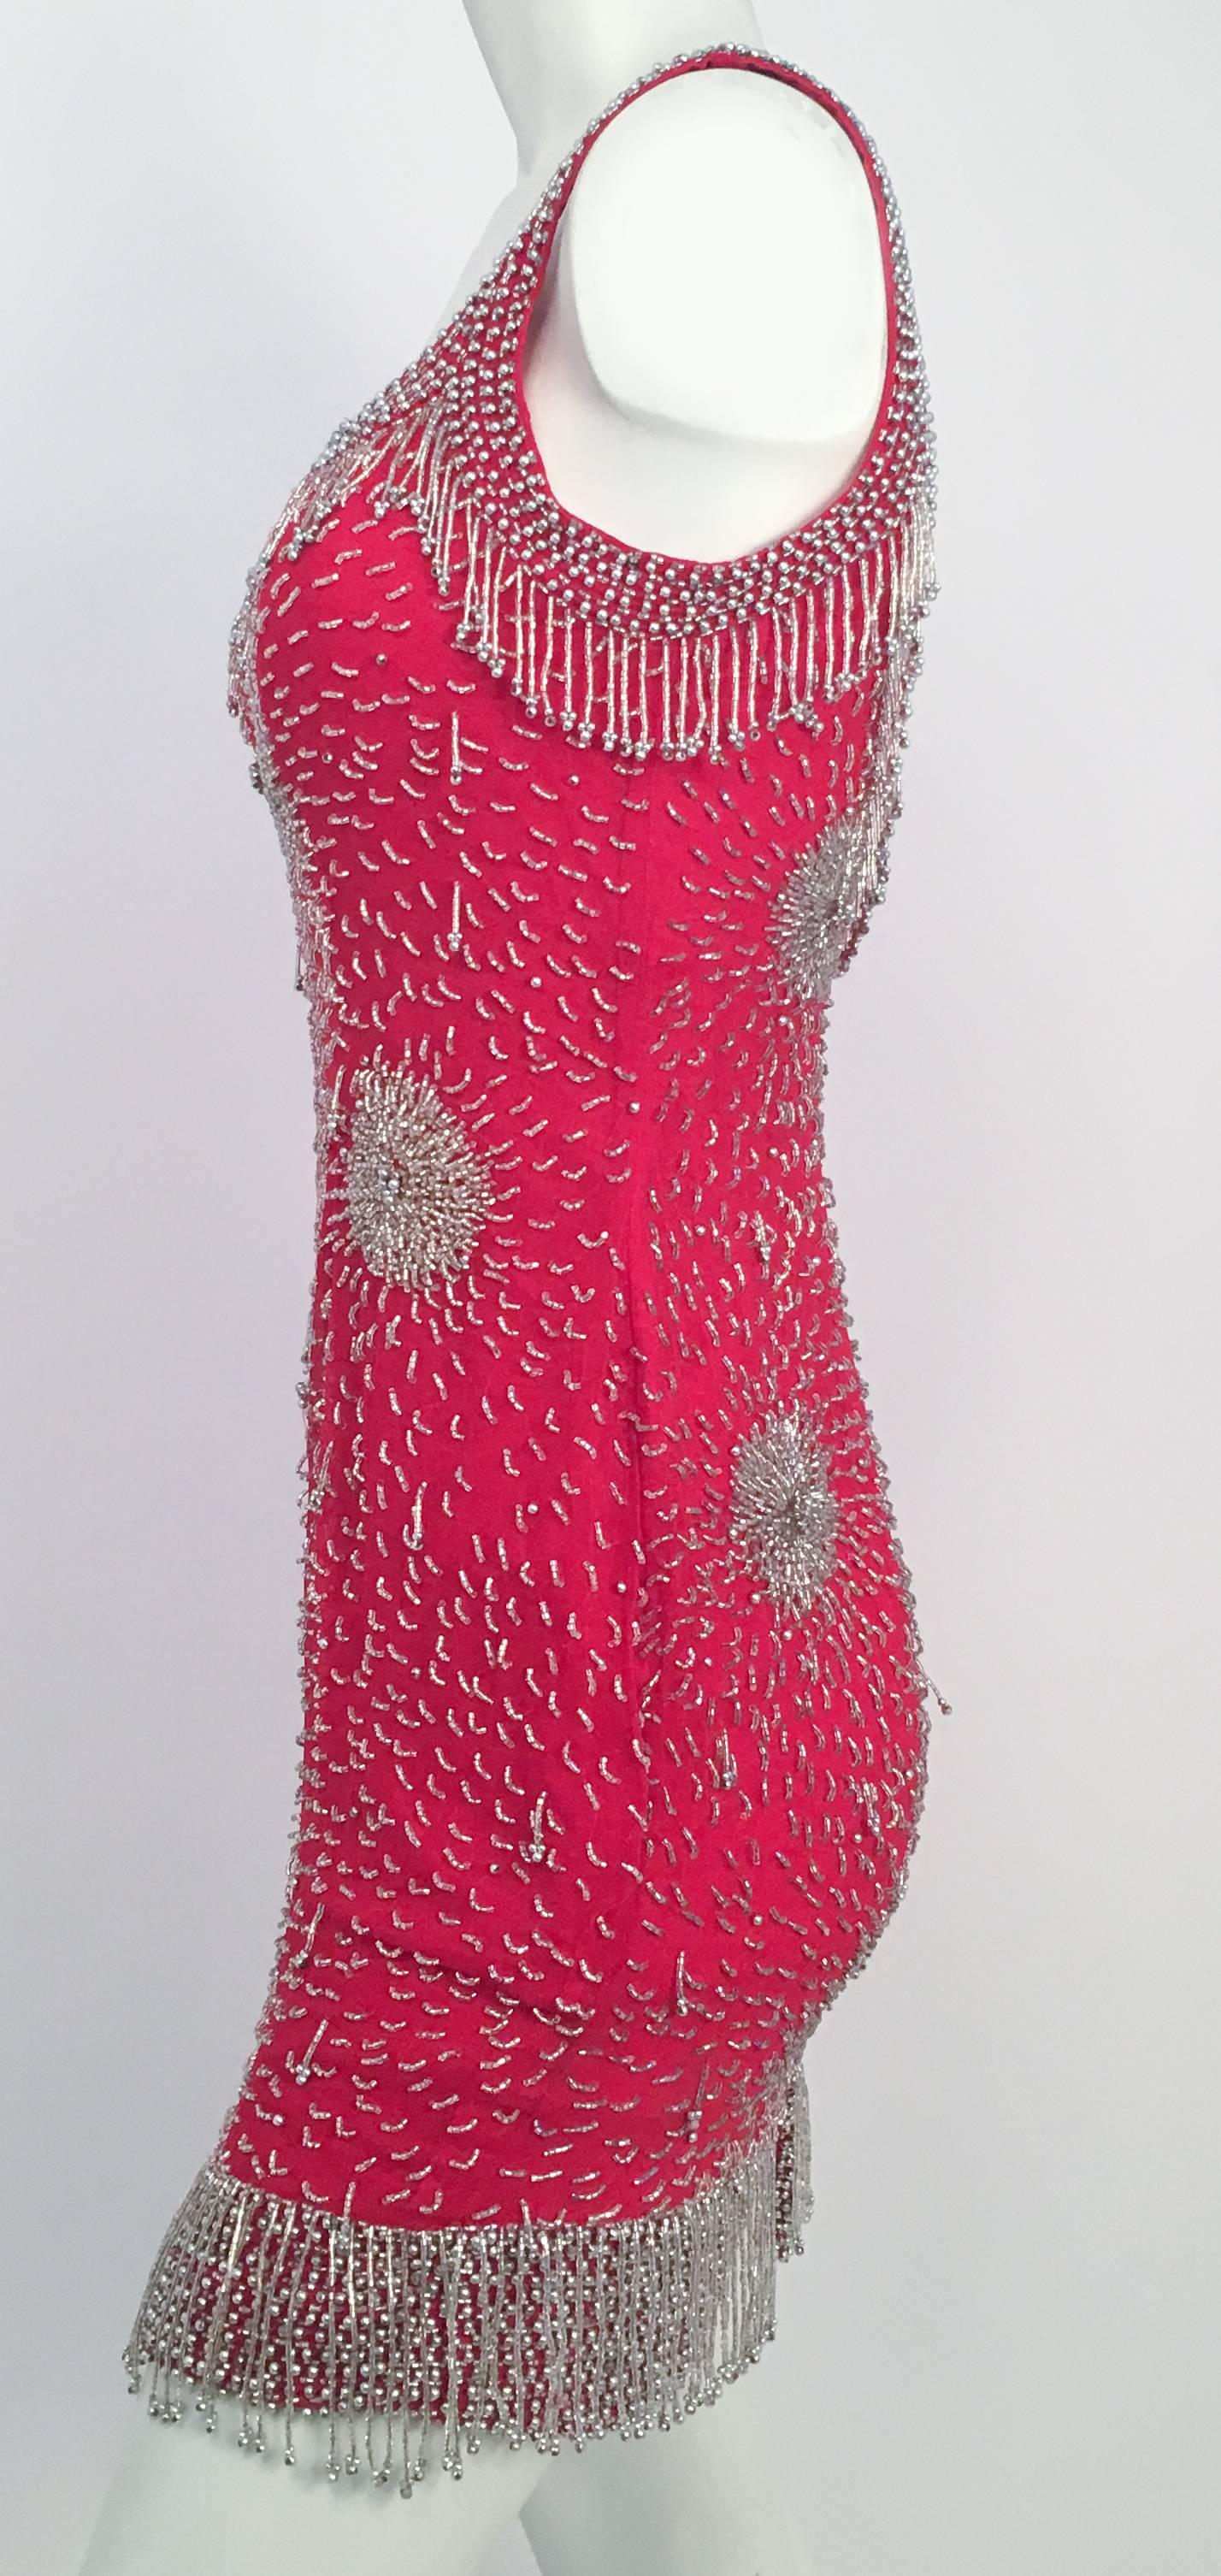 80s Beaded Red Mini Dress. Beaded fringe detail on neckline and hemline. Starburst designs beaded on chiffon w/ red silt satin lining. 